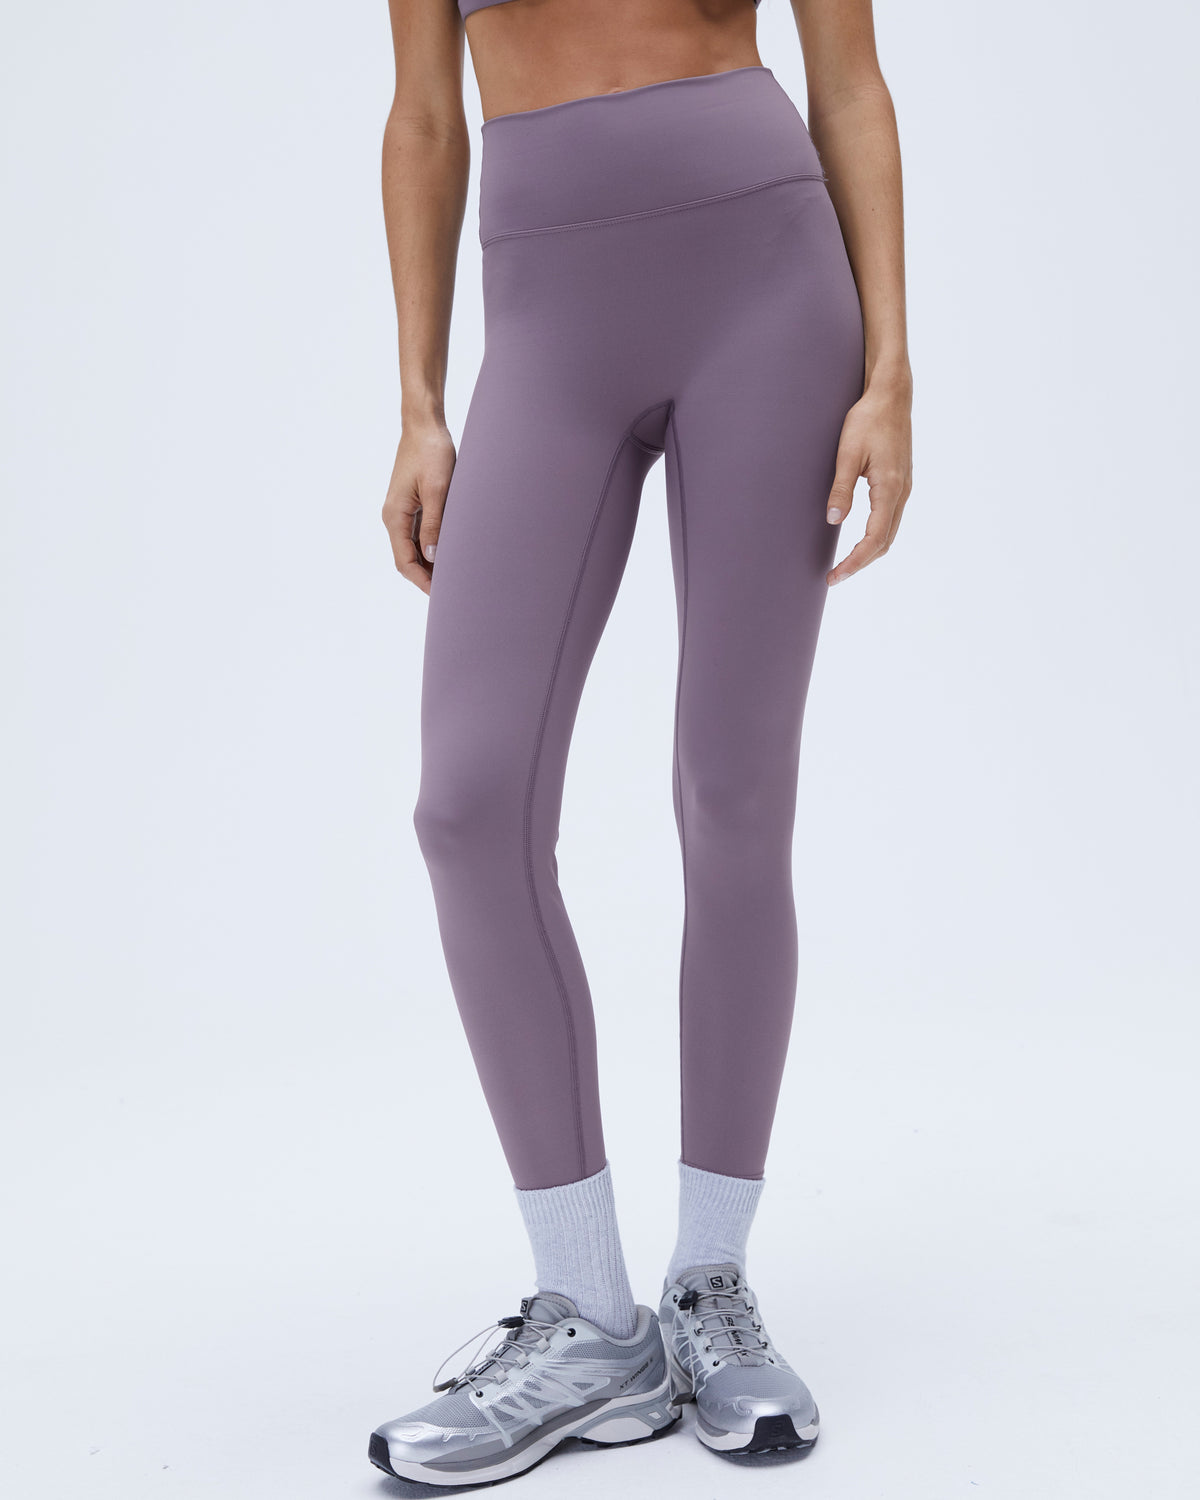 Women's Activewear Leggings - Purple